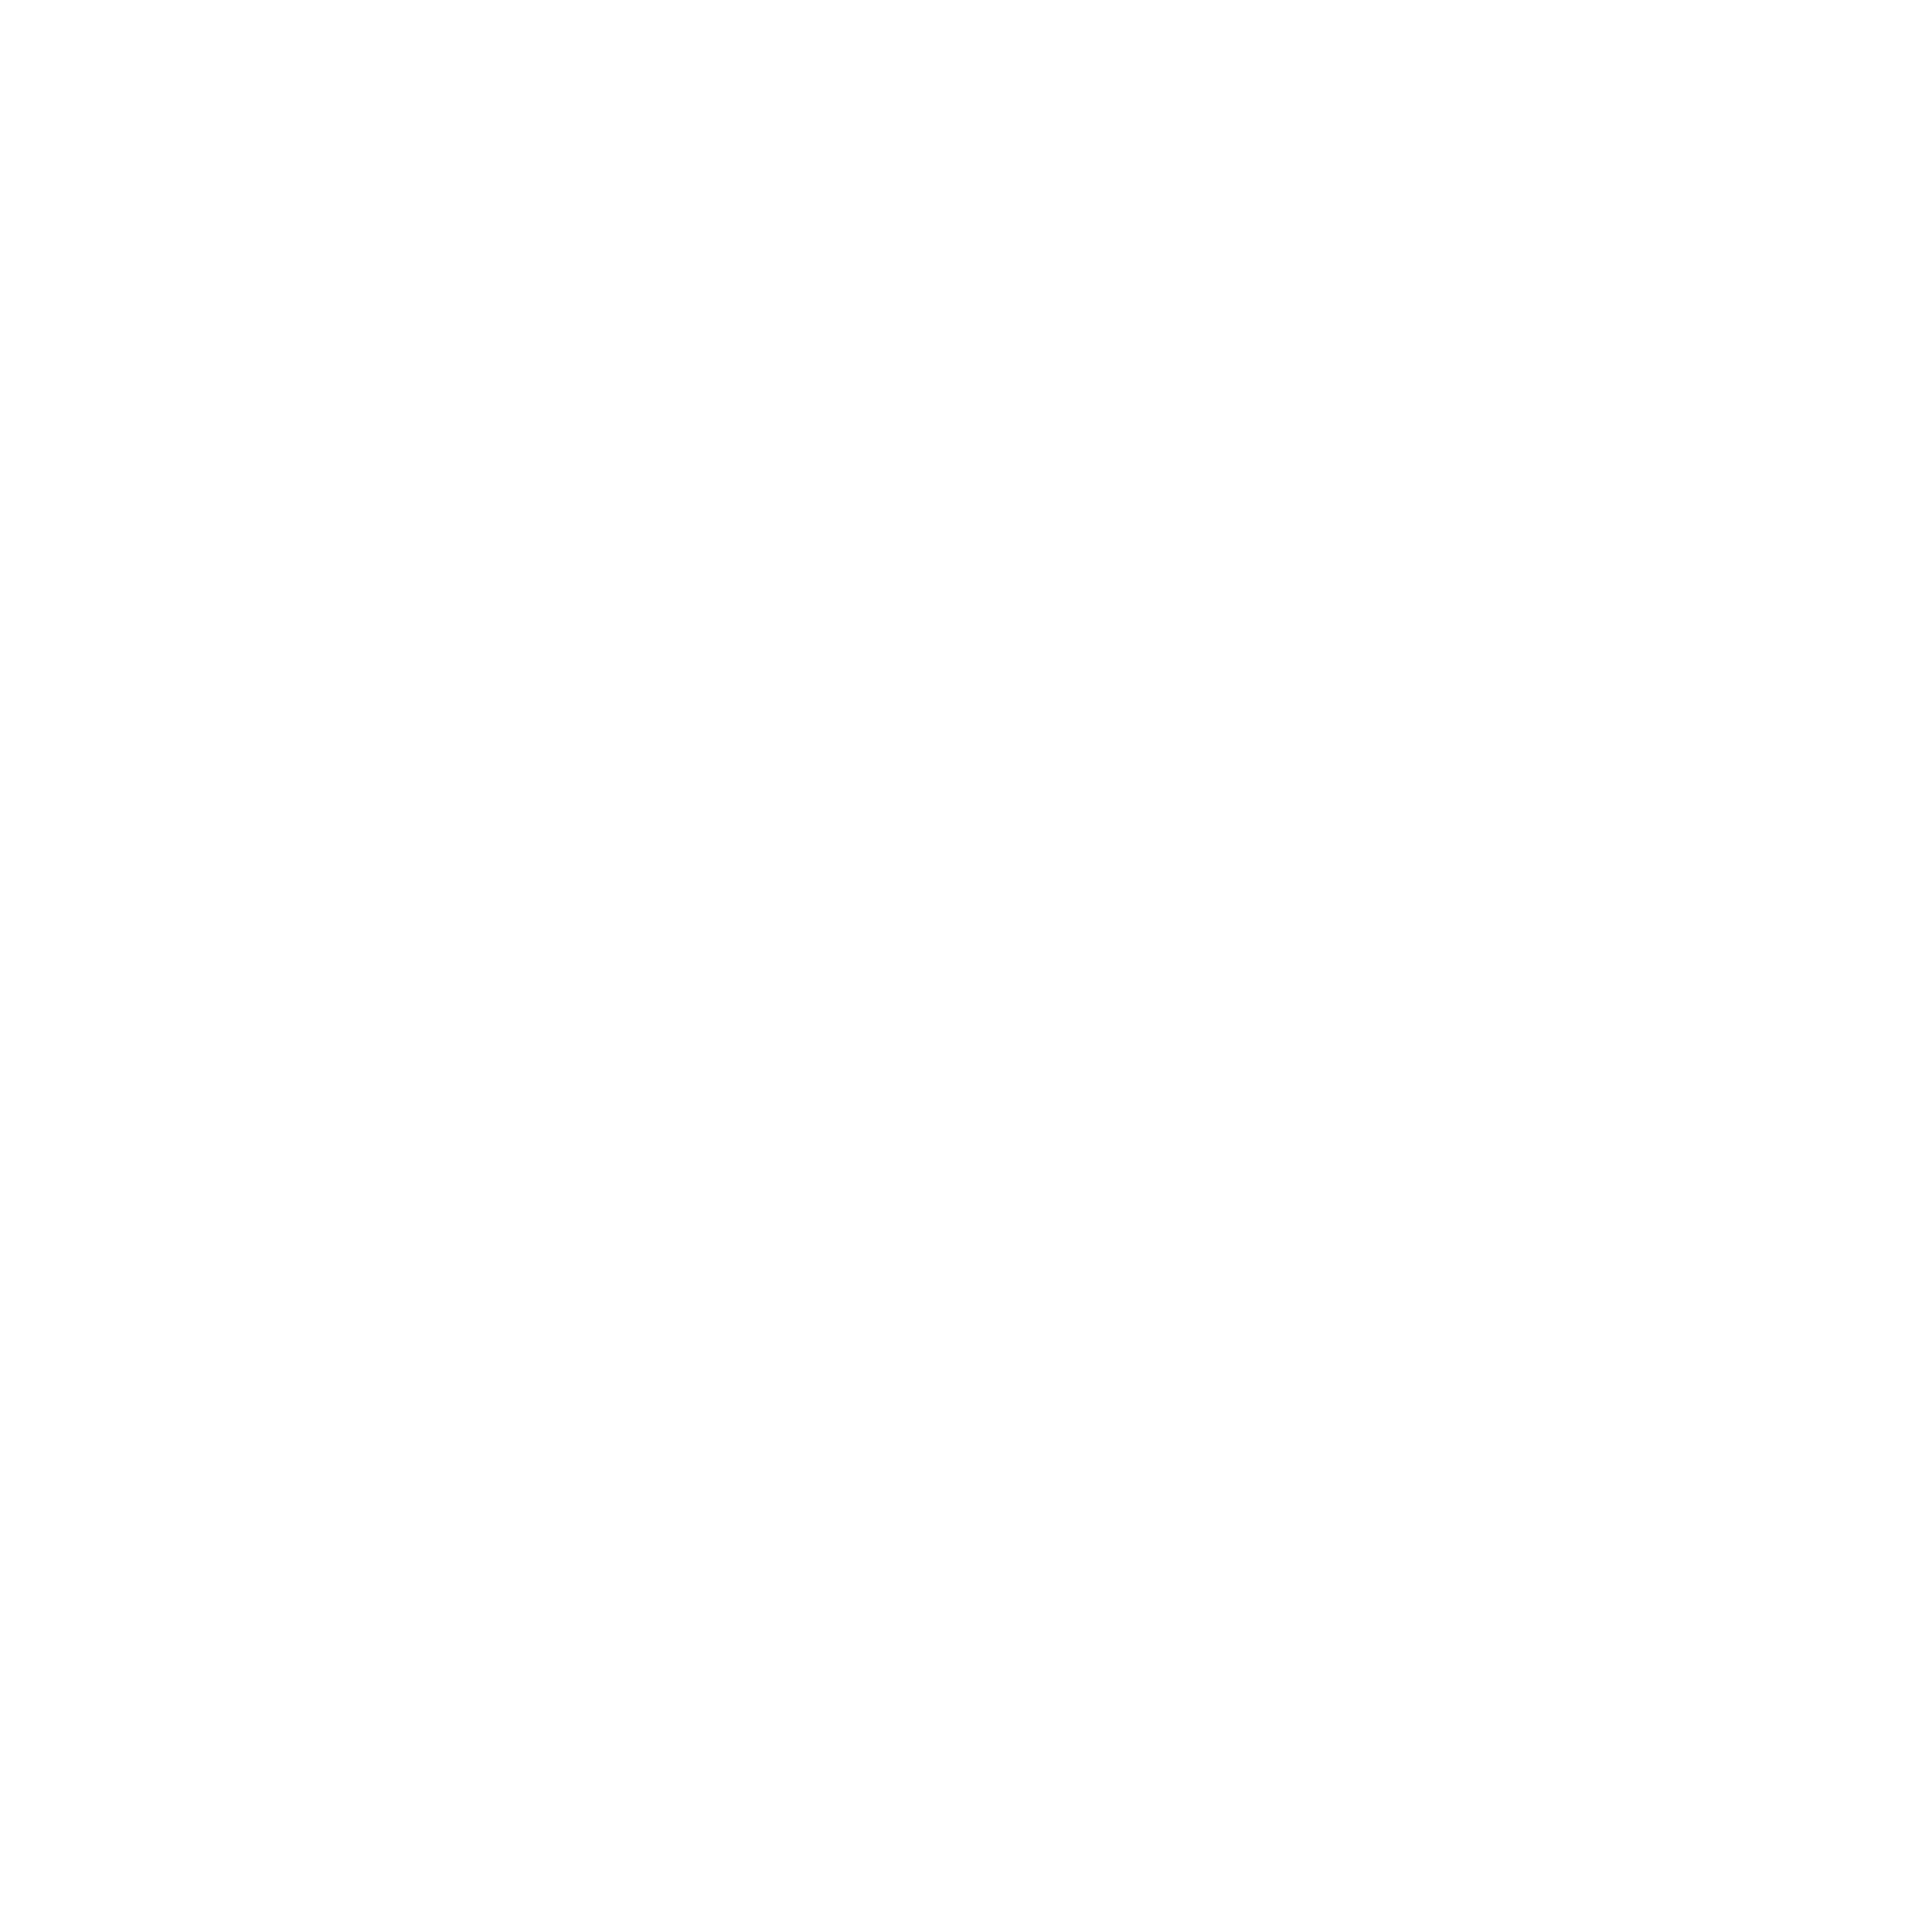 Akzo Nobel Logo